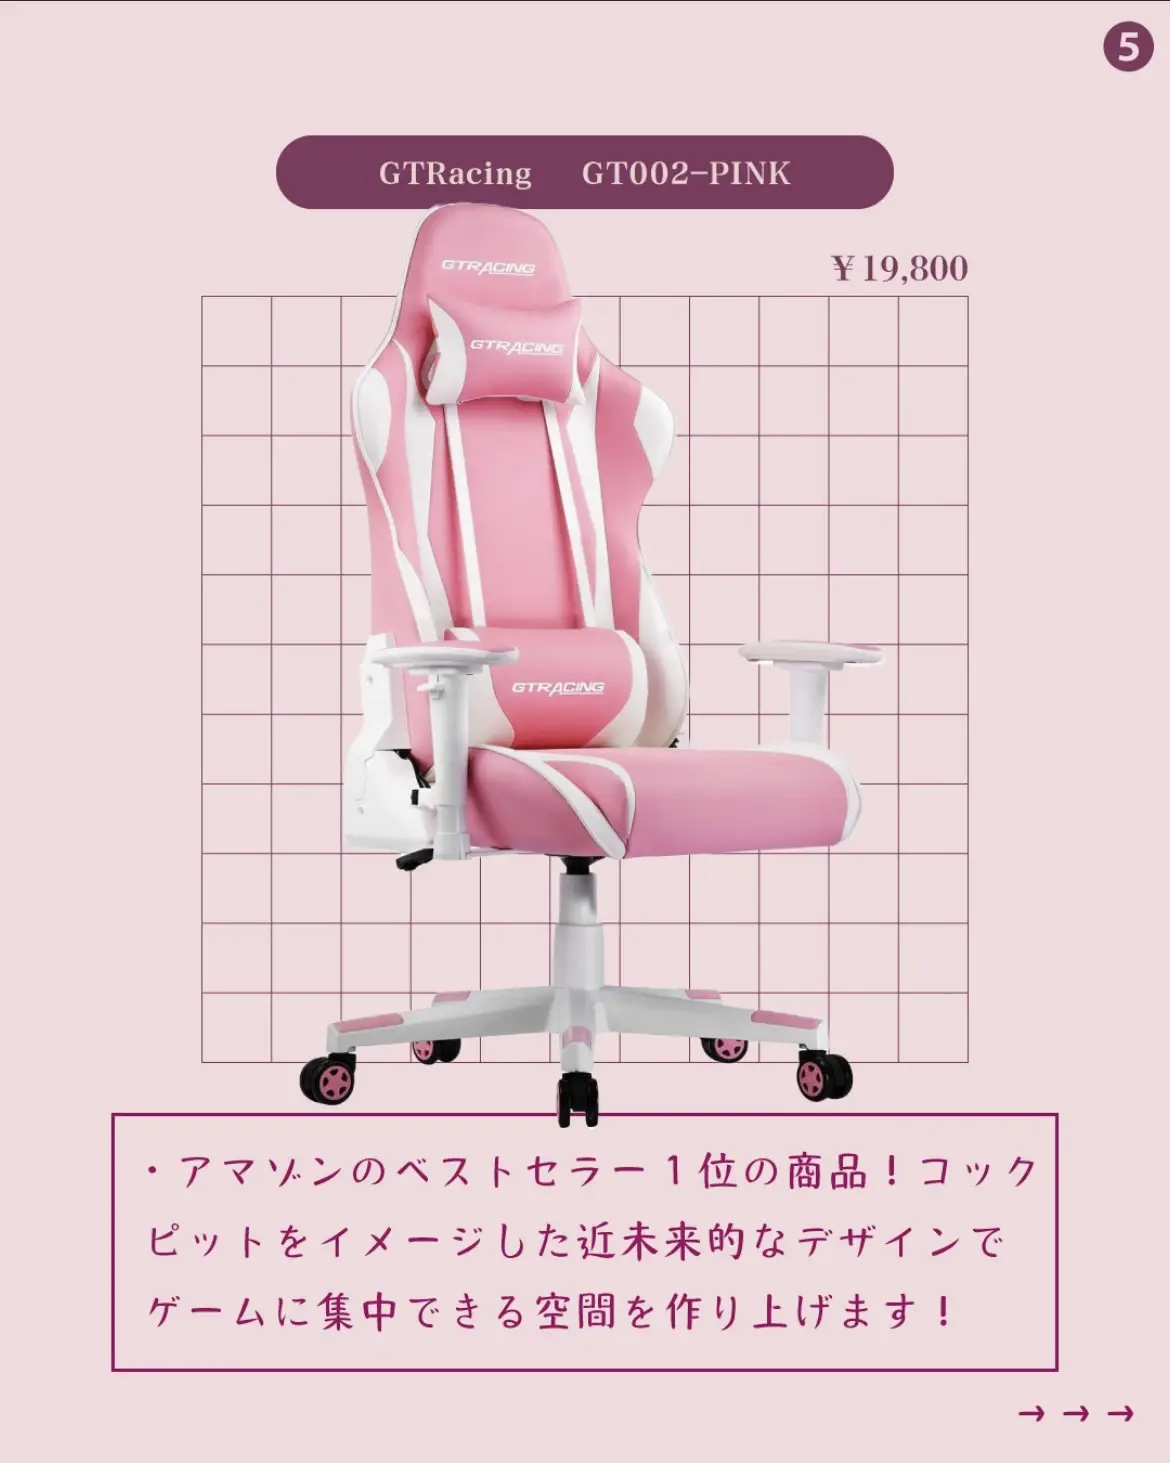 GTRACING ゲーミングチェア ピンク GT002-PINK - 椅子/チェア